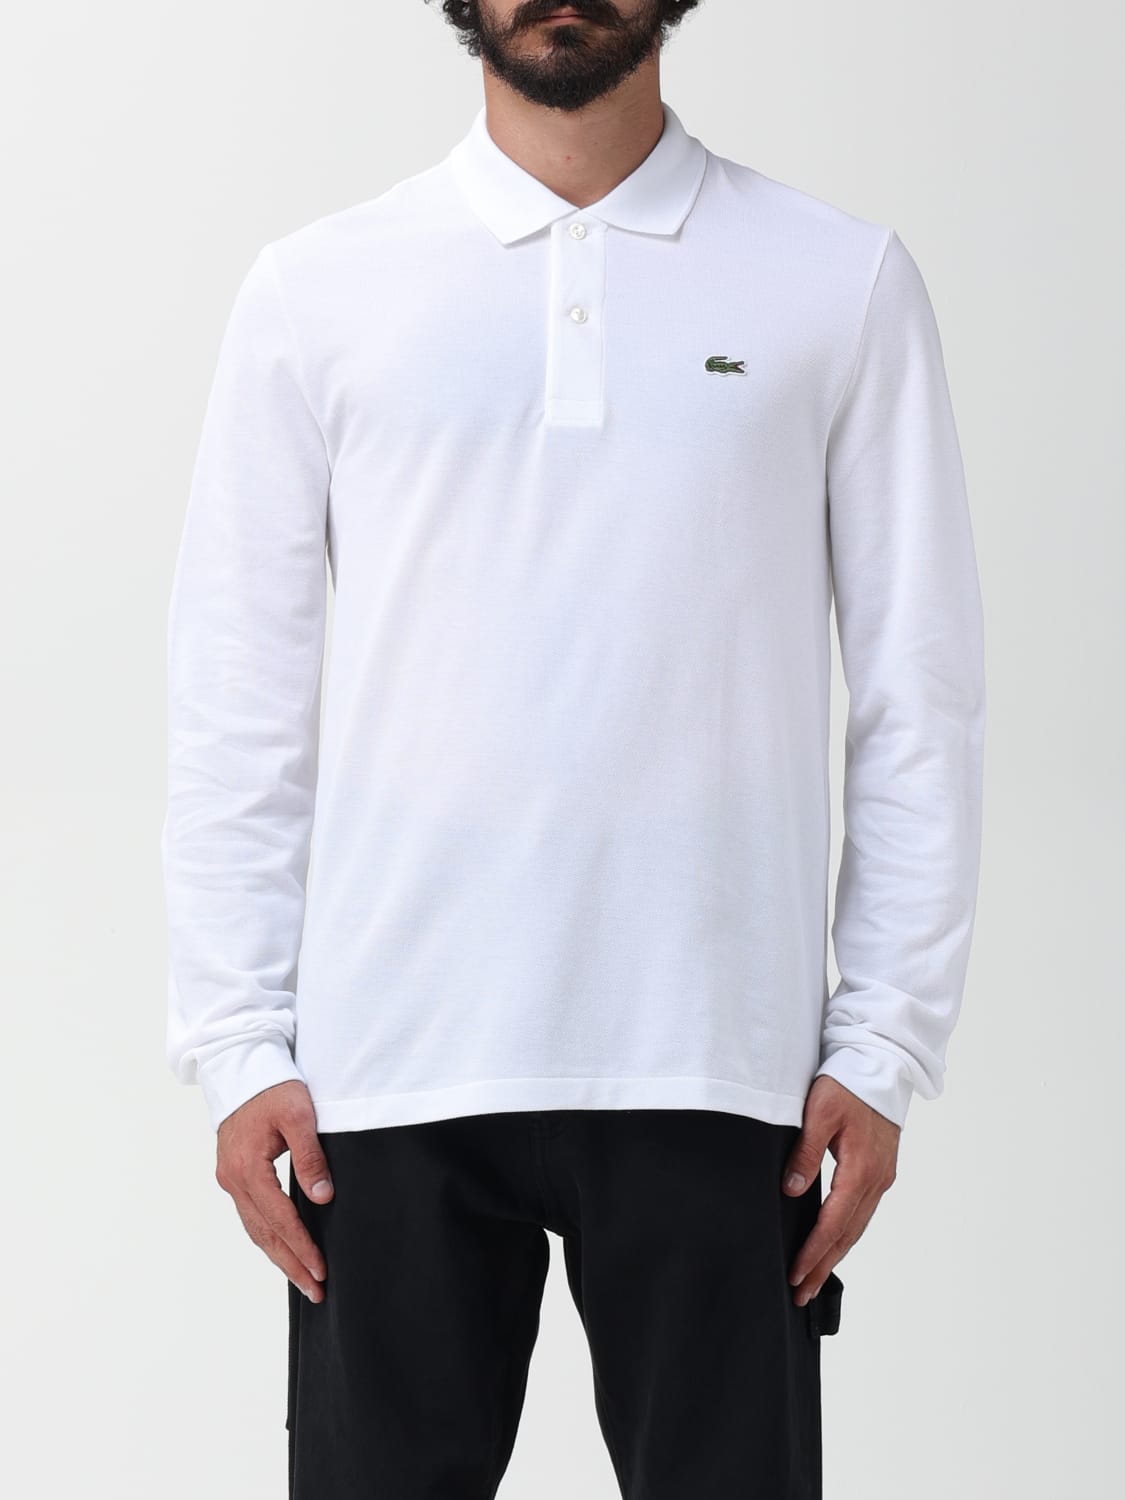  Lacoste Camiseta Niño Polo Blanco, Blanco : Ropa